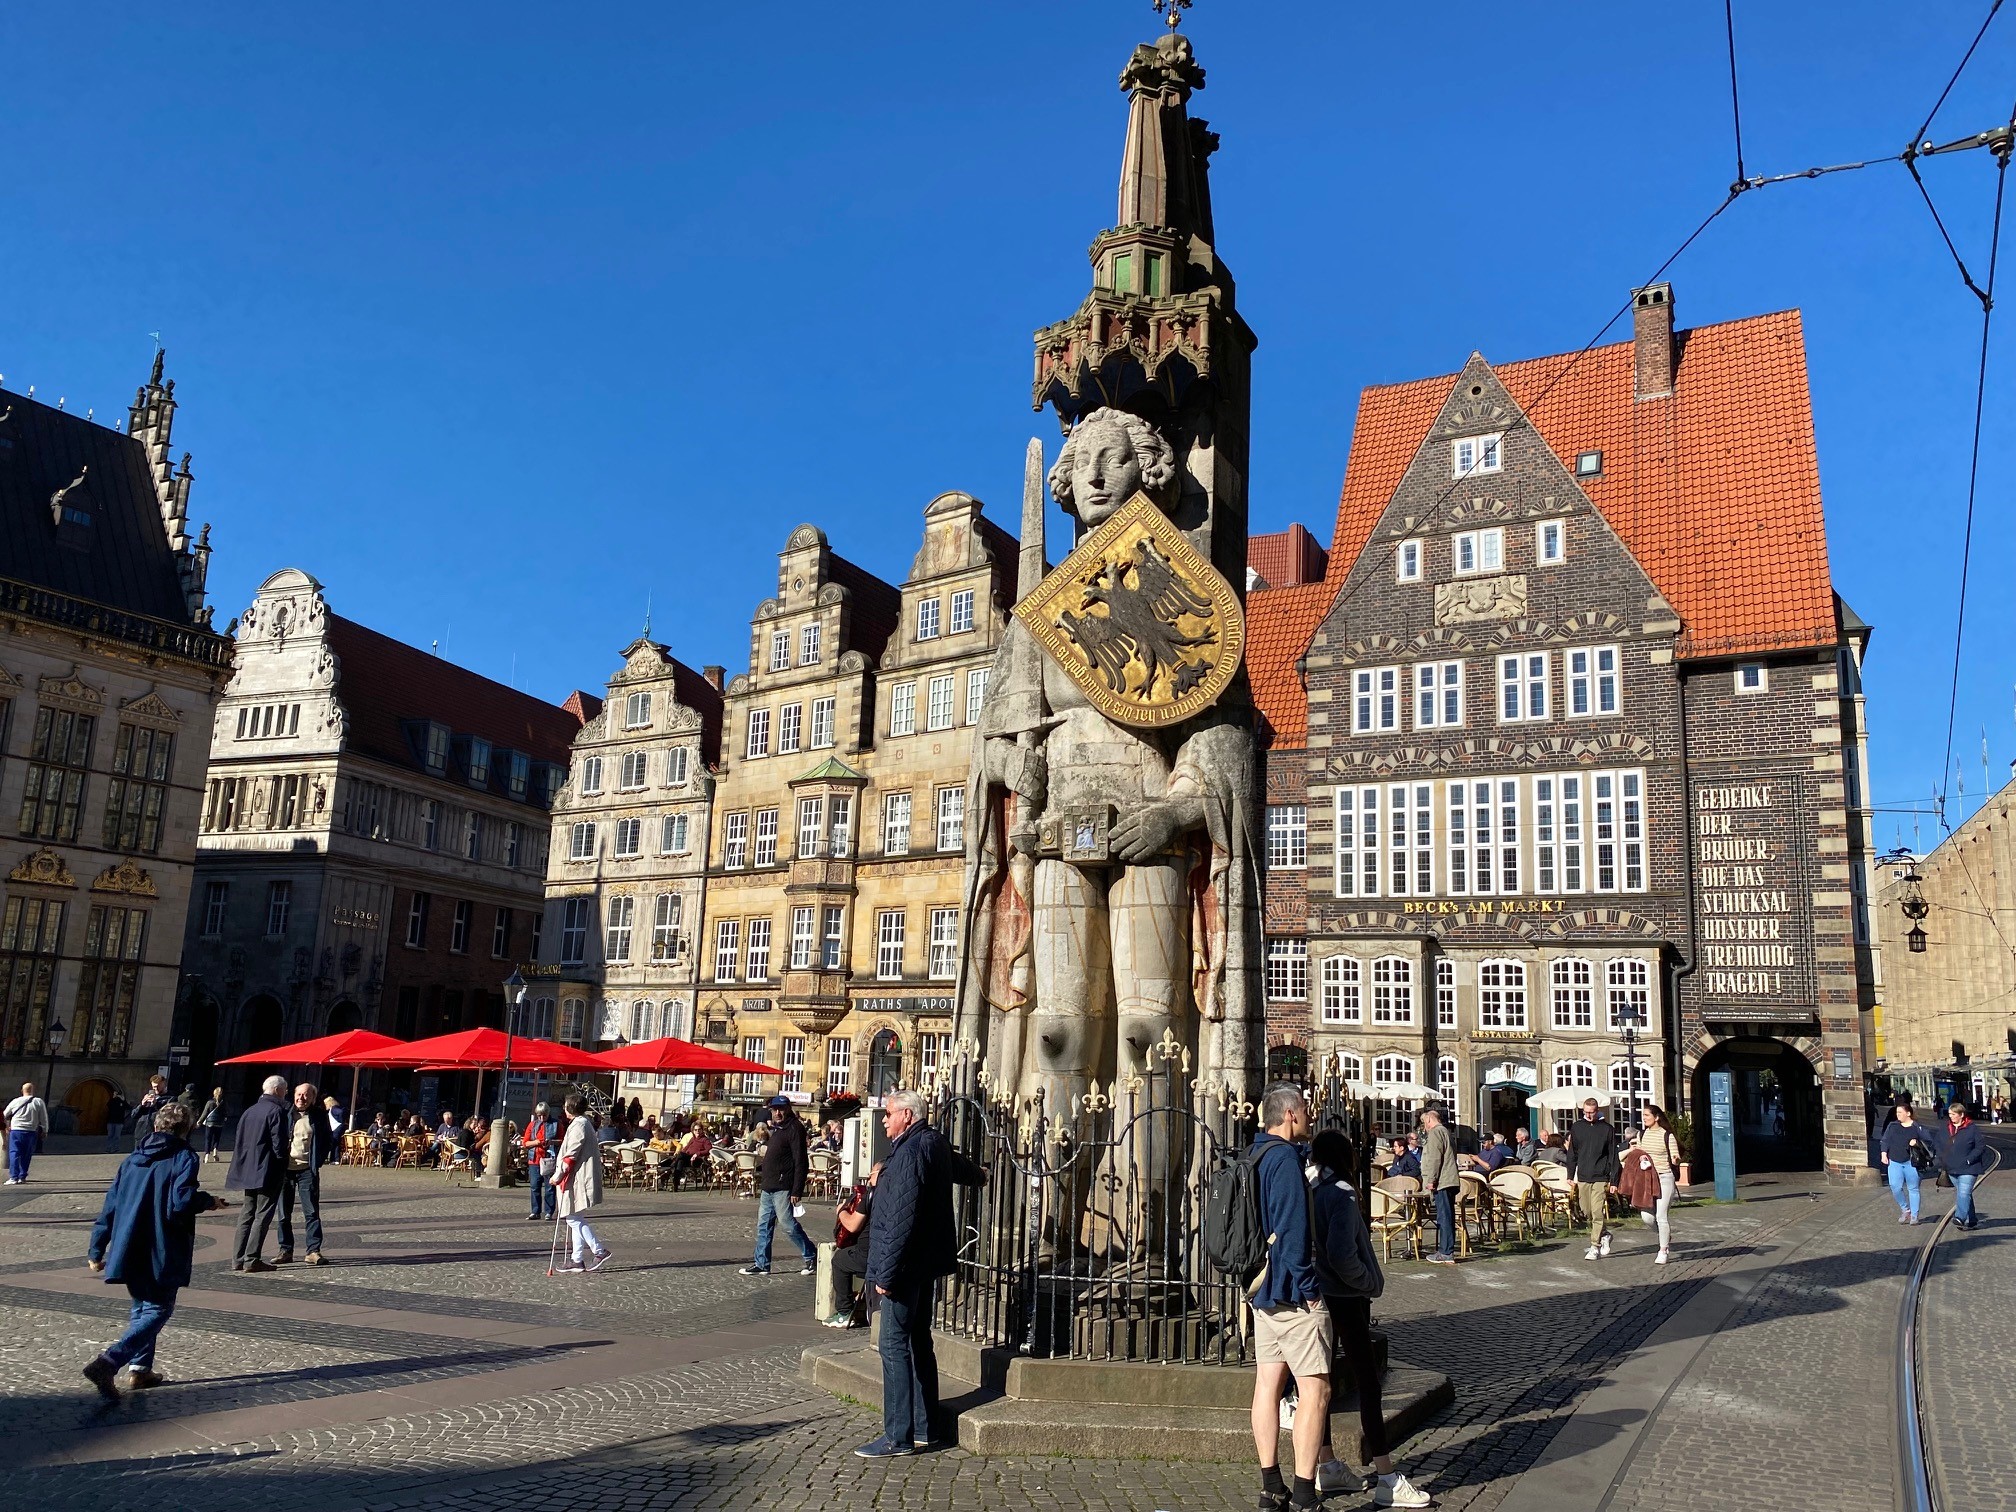 the Bremen market place with Roland statue